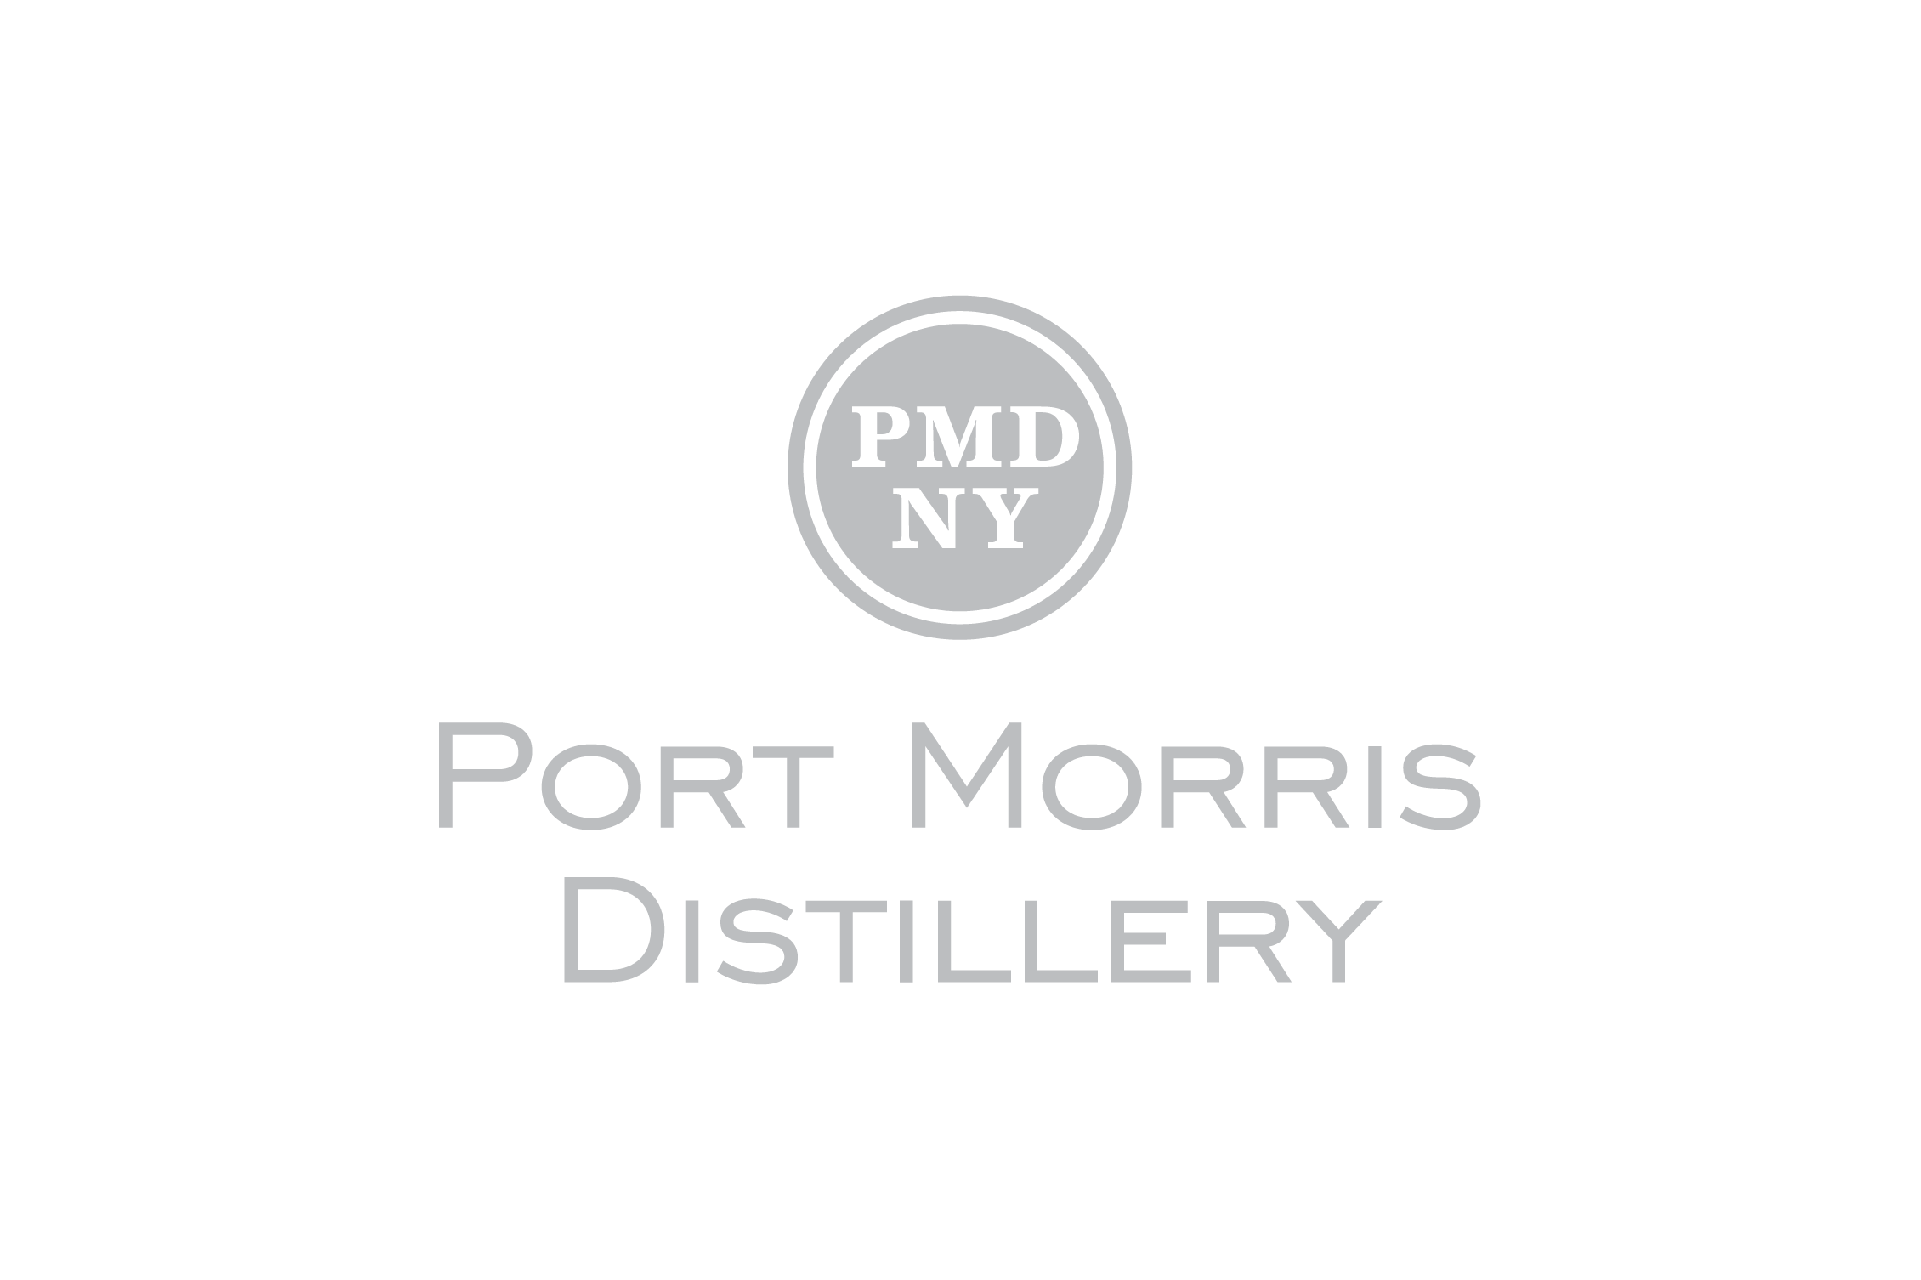 Port Morris Distillery